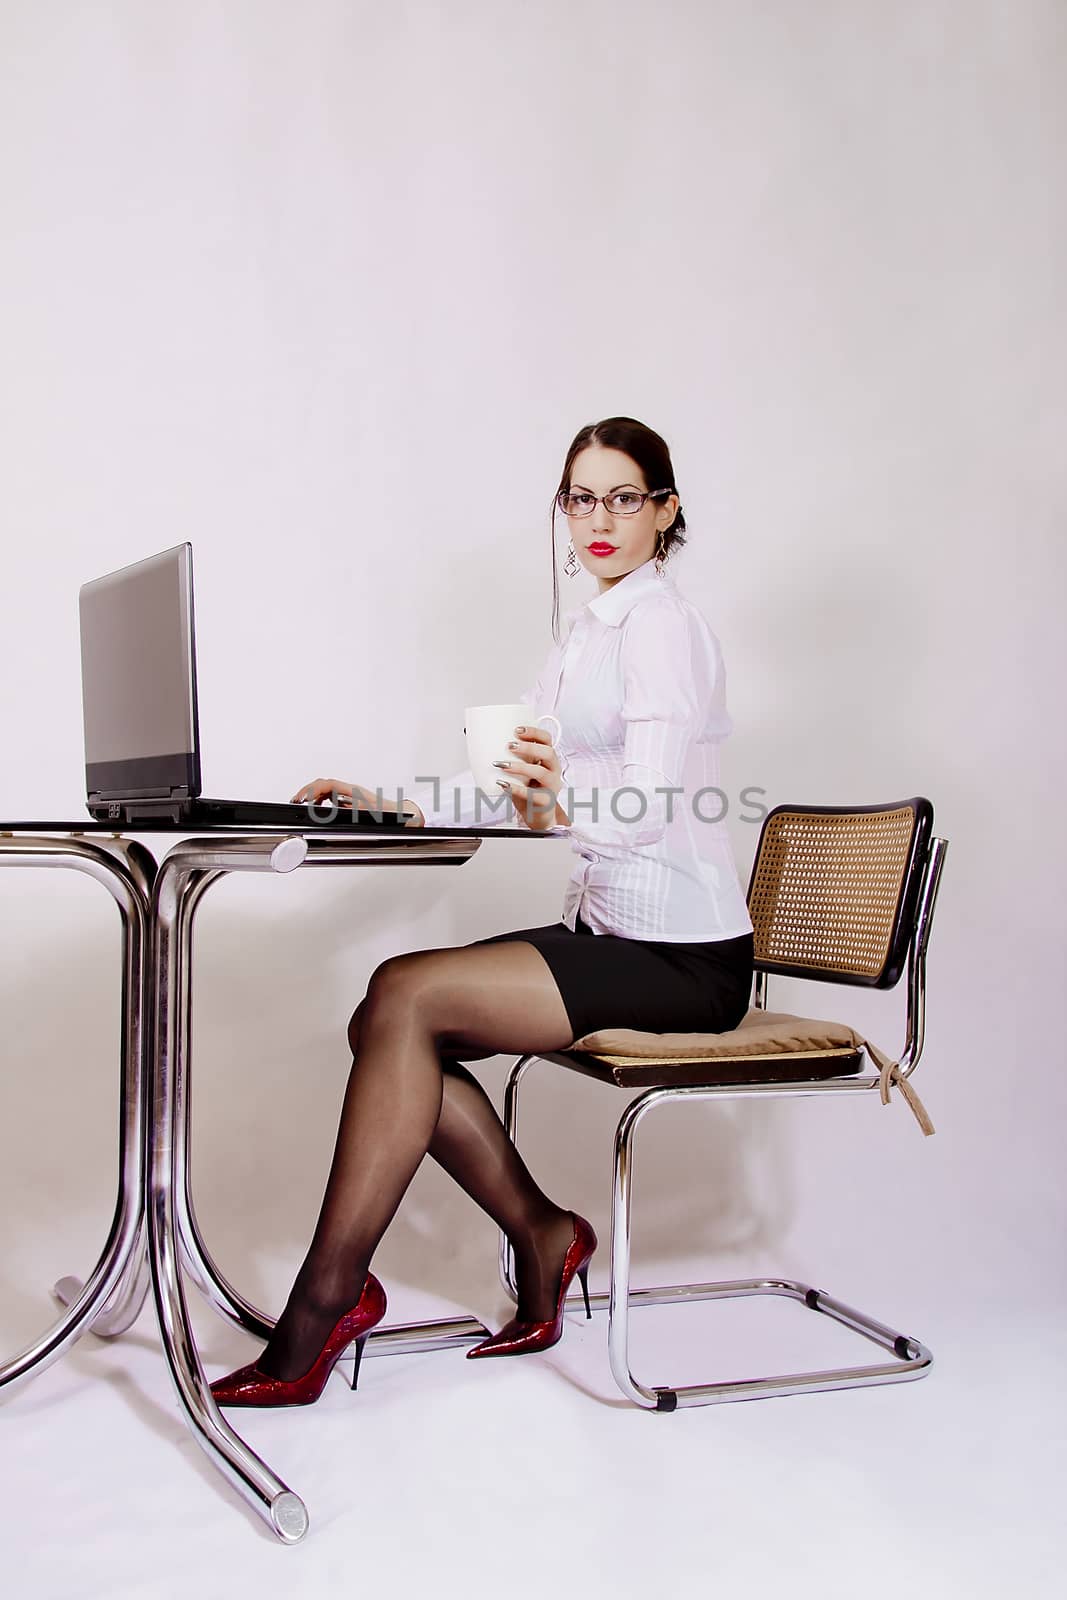 Businesswoman sitting at desk by dukibu